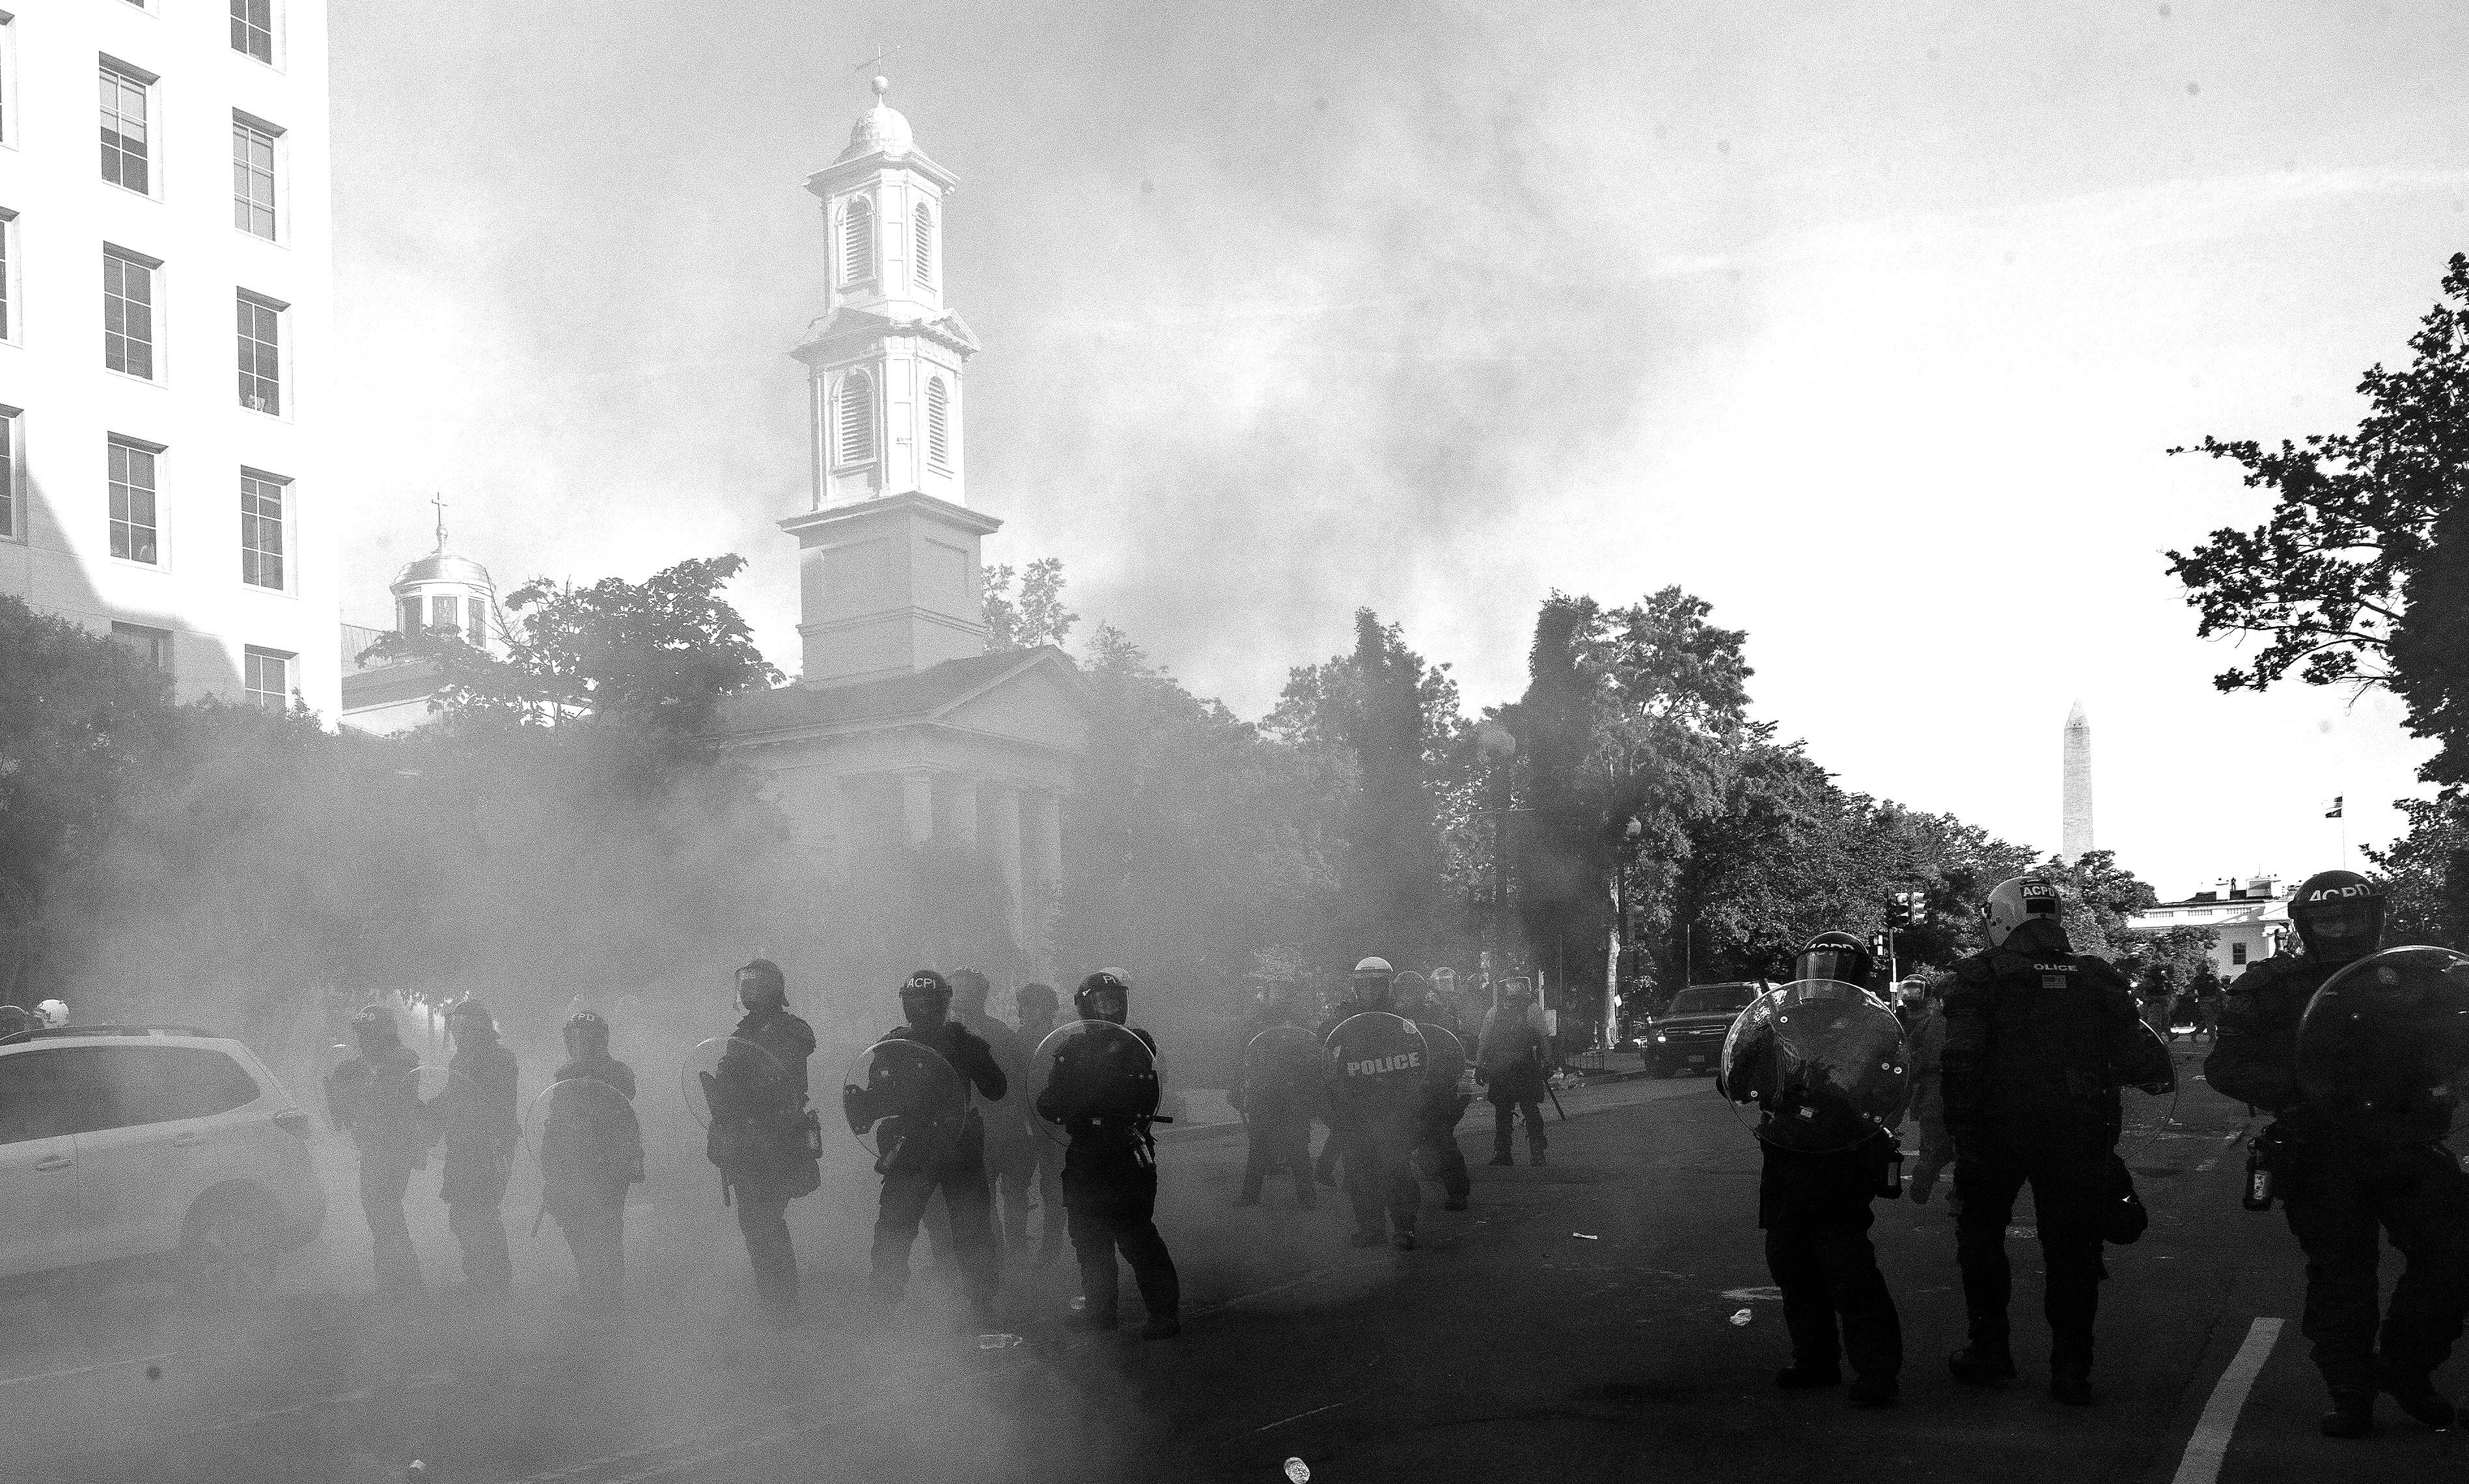 Demonstrators set fire to the basement nursery of St. John’s Episcopal Church in Washington, D.C., on May 31, 2020.